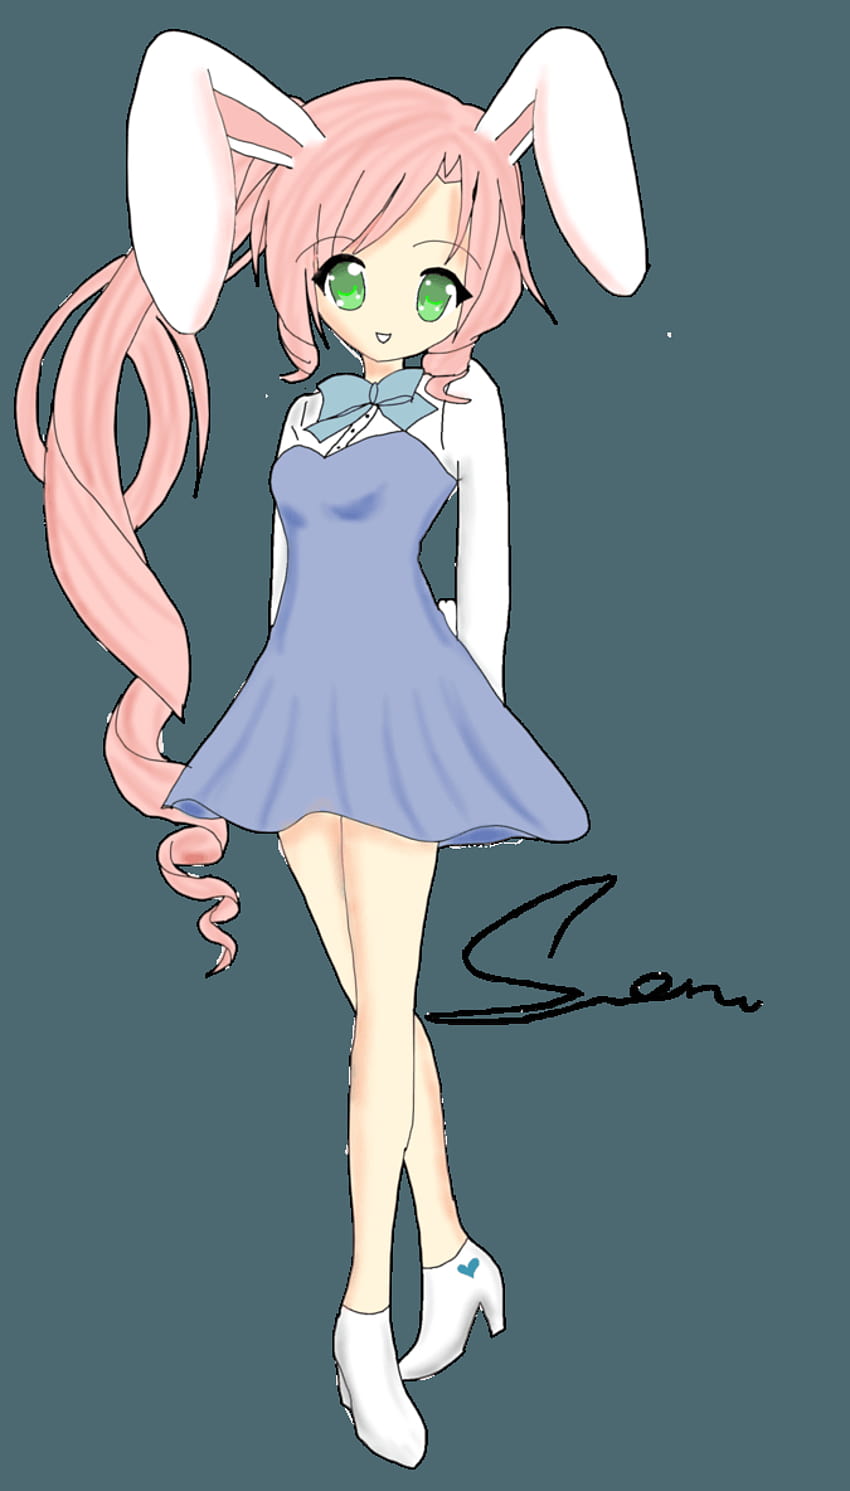 Anime Bunny Girl Render by Nanavix3 on DeviantArt